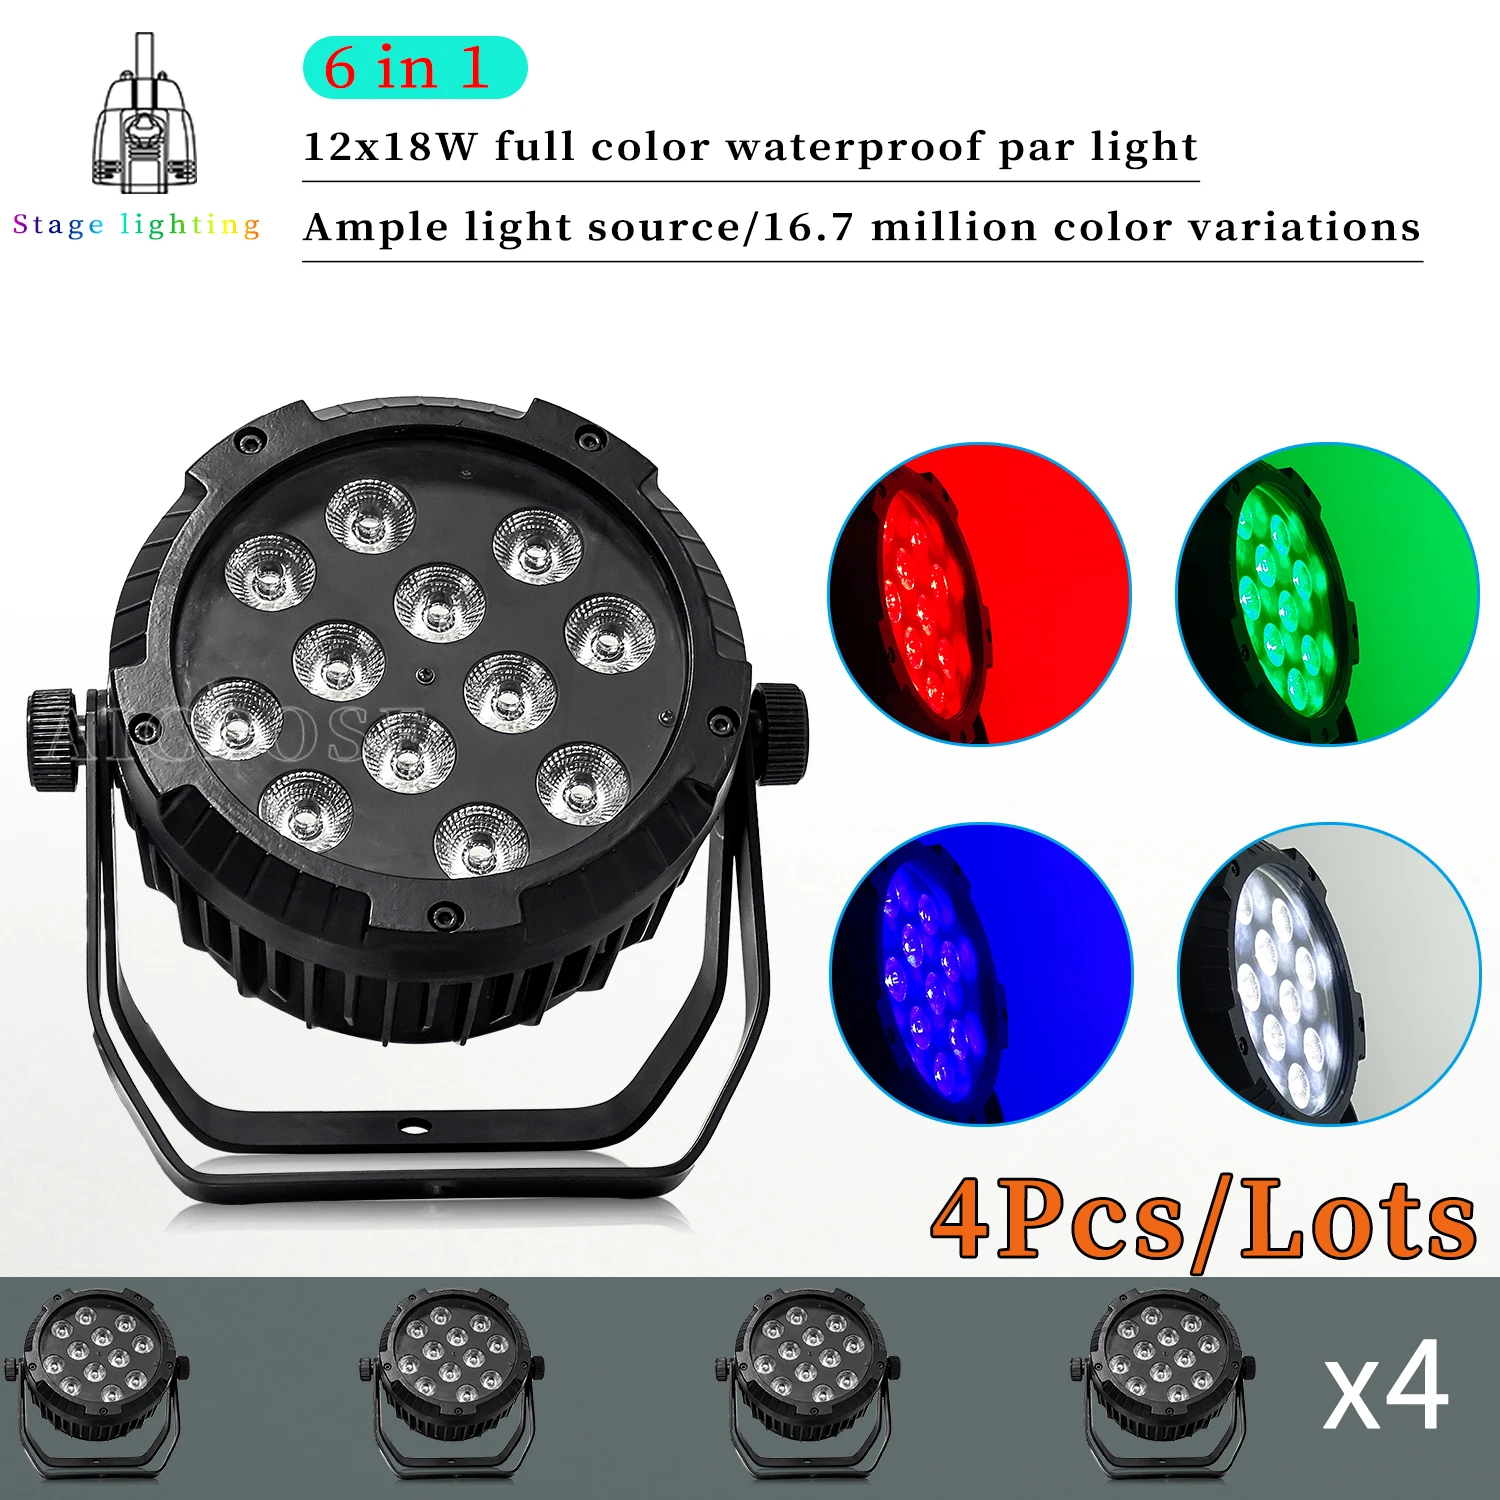 

4Pcs/Lots IP65 Waterproof 12x18W RGBW 4 in 1 LED Par Light 12x18W RGBWA UV 6 in 1 Outdoor Performance Party DJ Disco Light